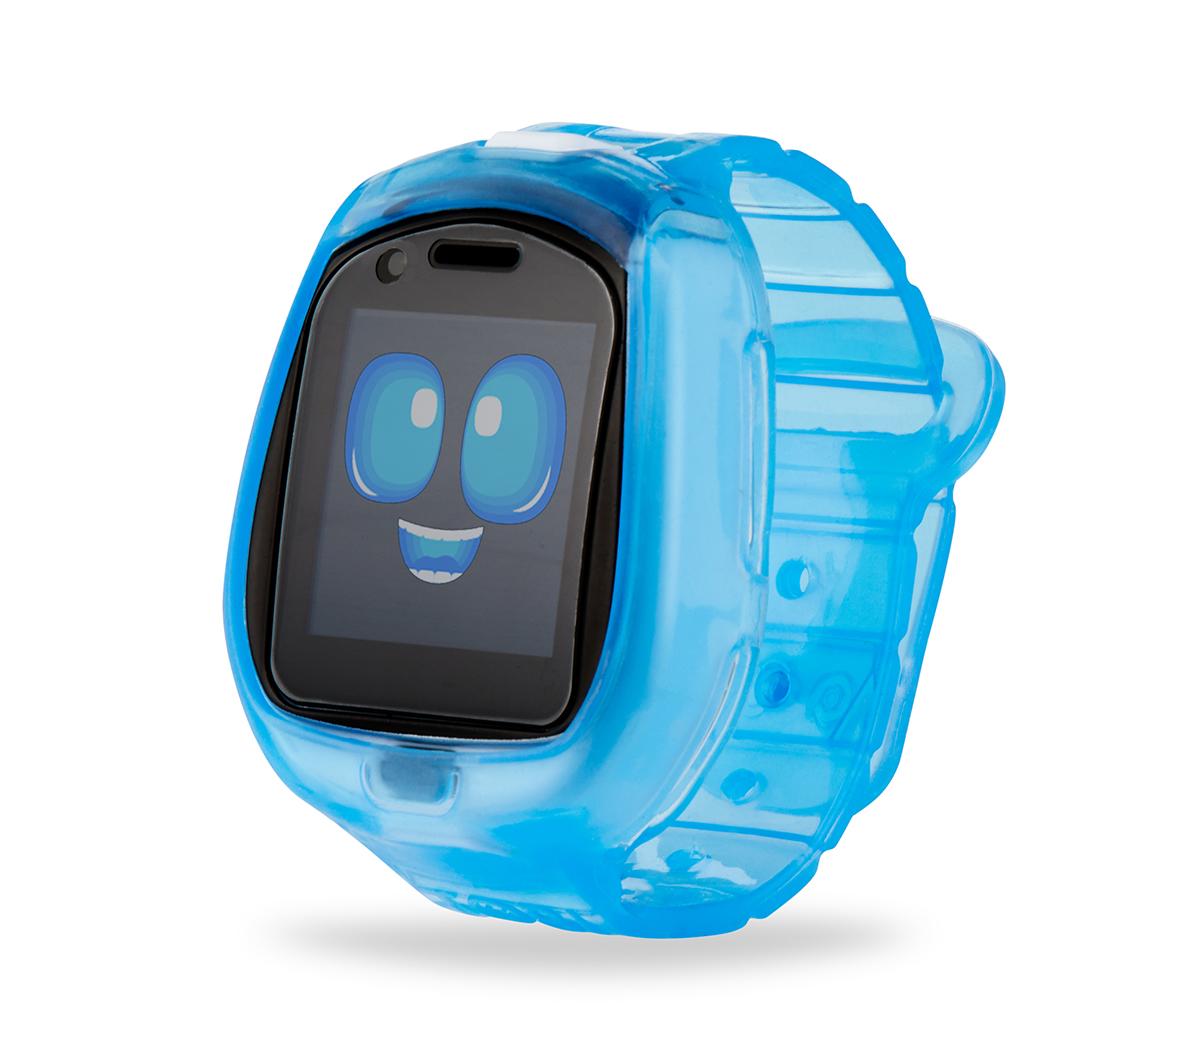 Little Tikes Tobi Robot Smartwatch Blue Toymaster Ballina